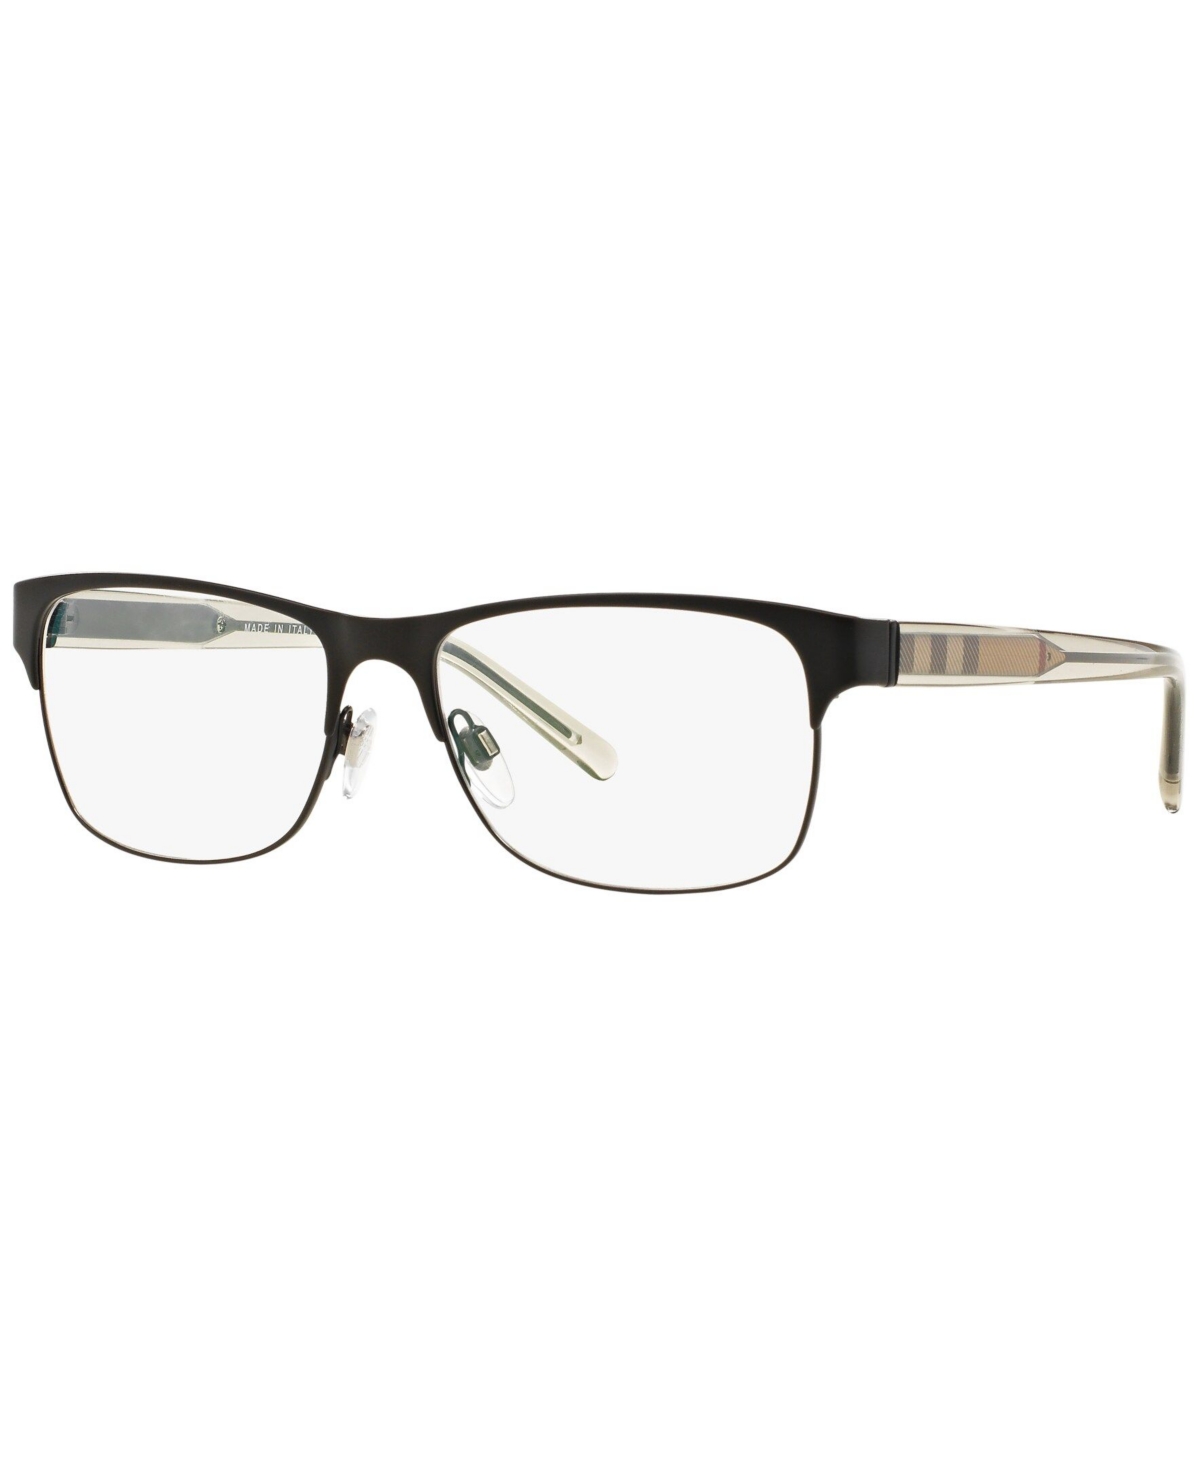 BE1289 Men's Rectangle Eyeglasses - Matte Blk